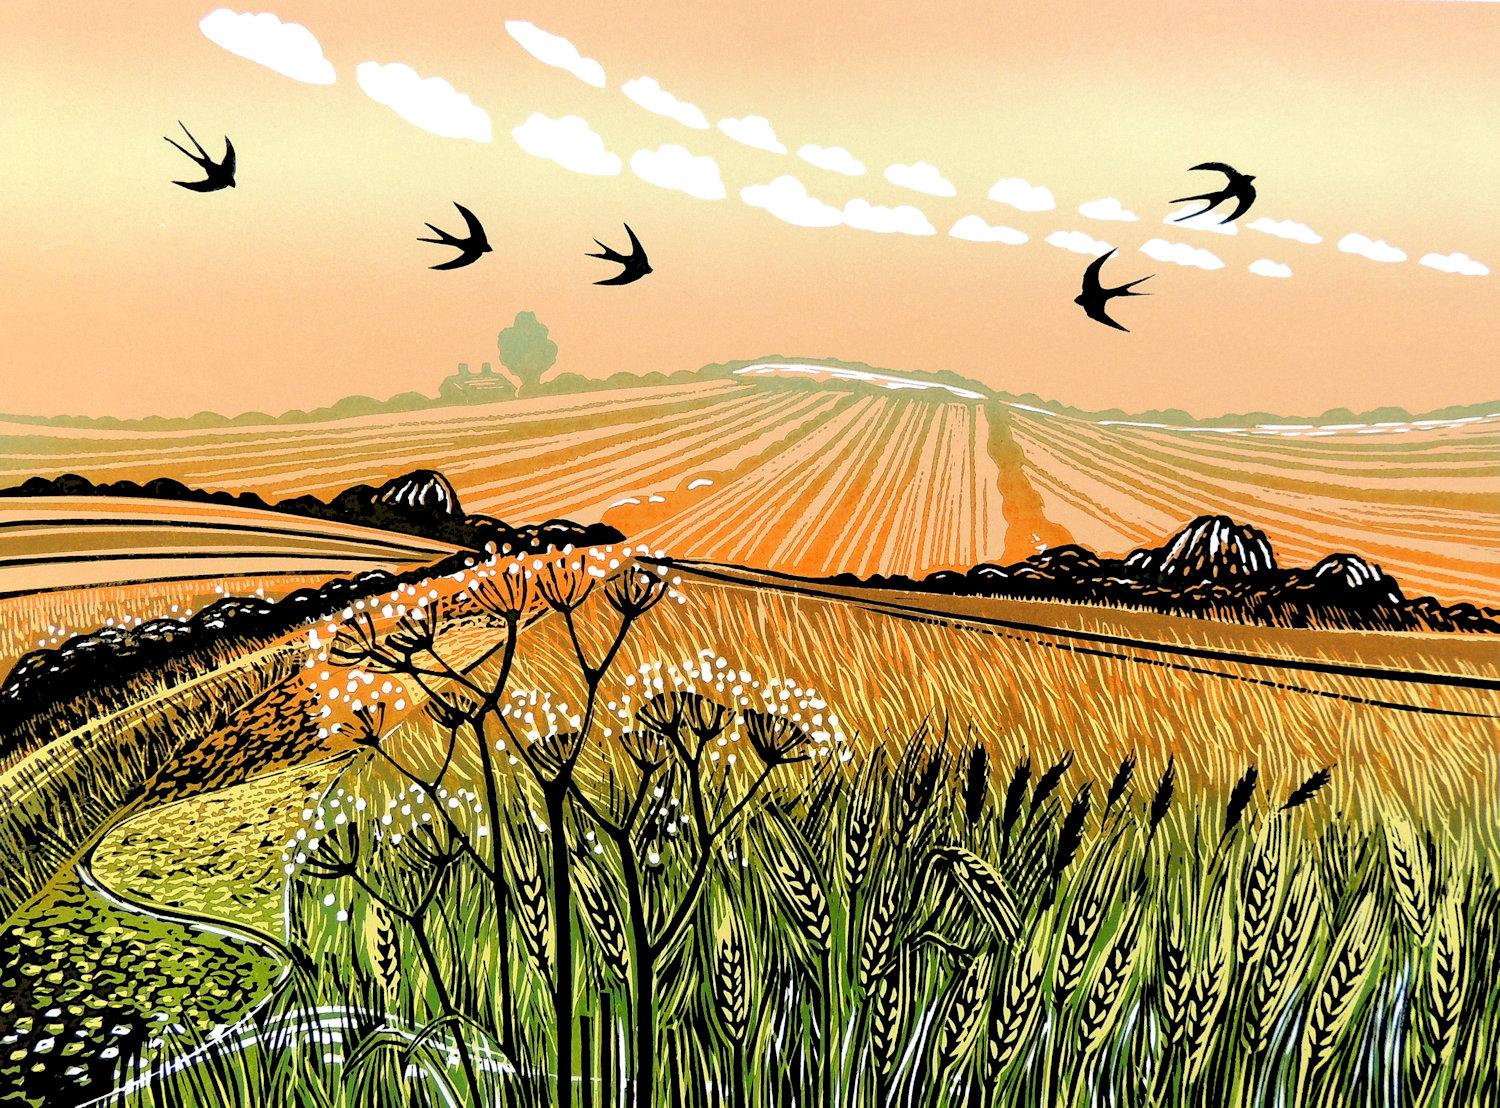 Swallows in Summer, Mounted Linocut print, Landscape art, Nature, Birds